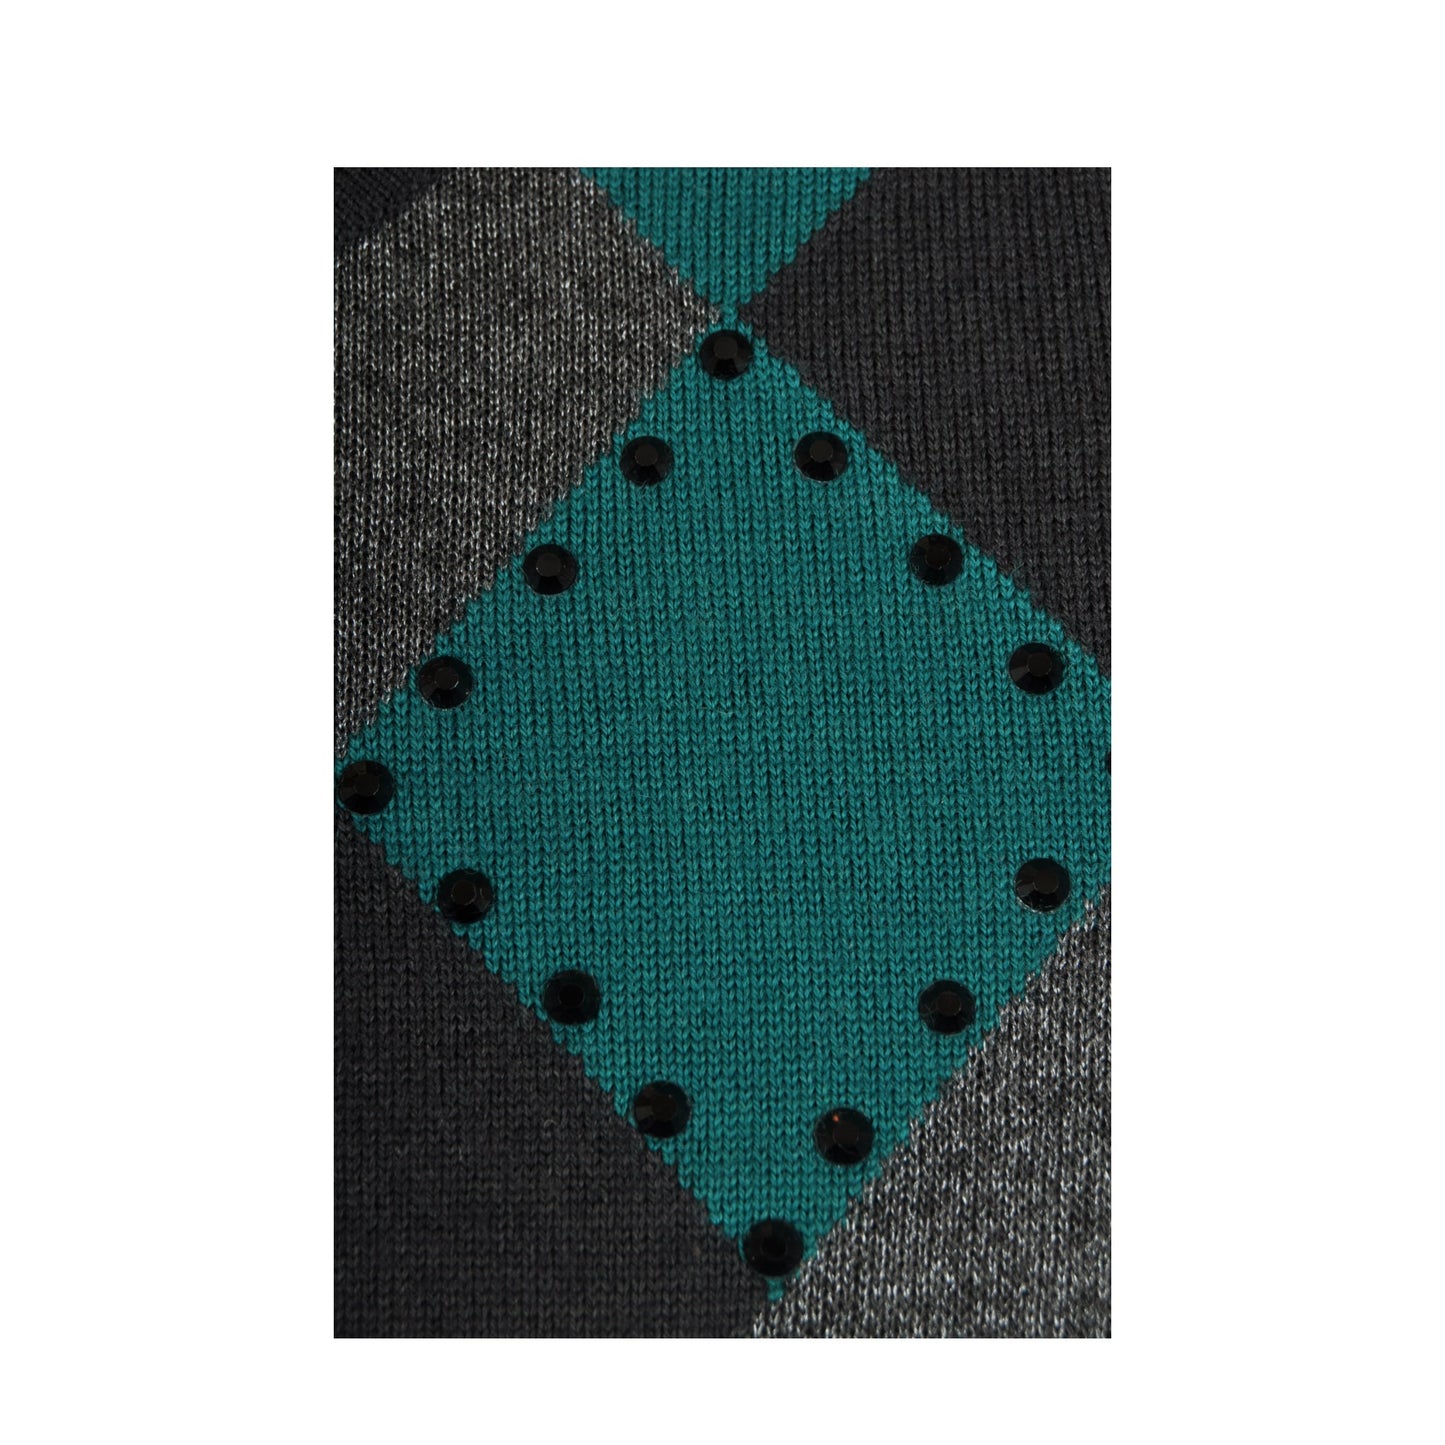 Vintage Knitwear Sweater Retro Argyle Pattern Green/Grey Ladies Medium